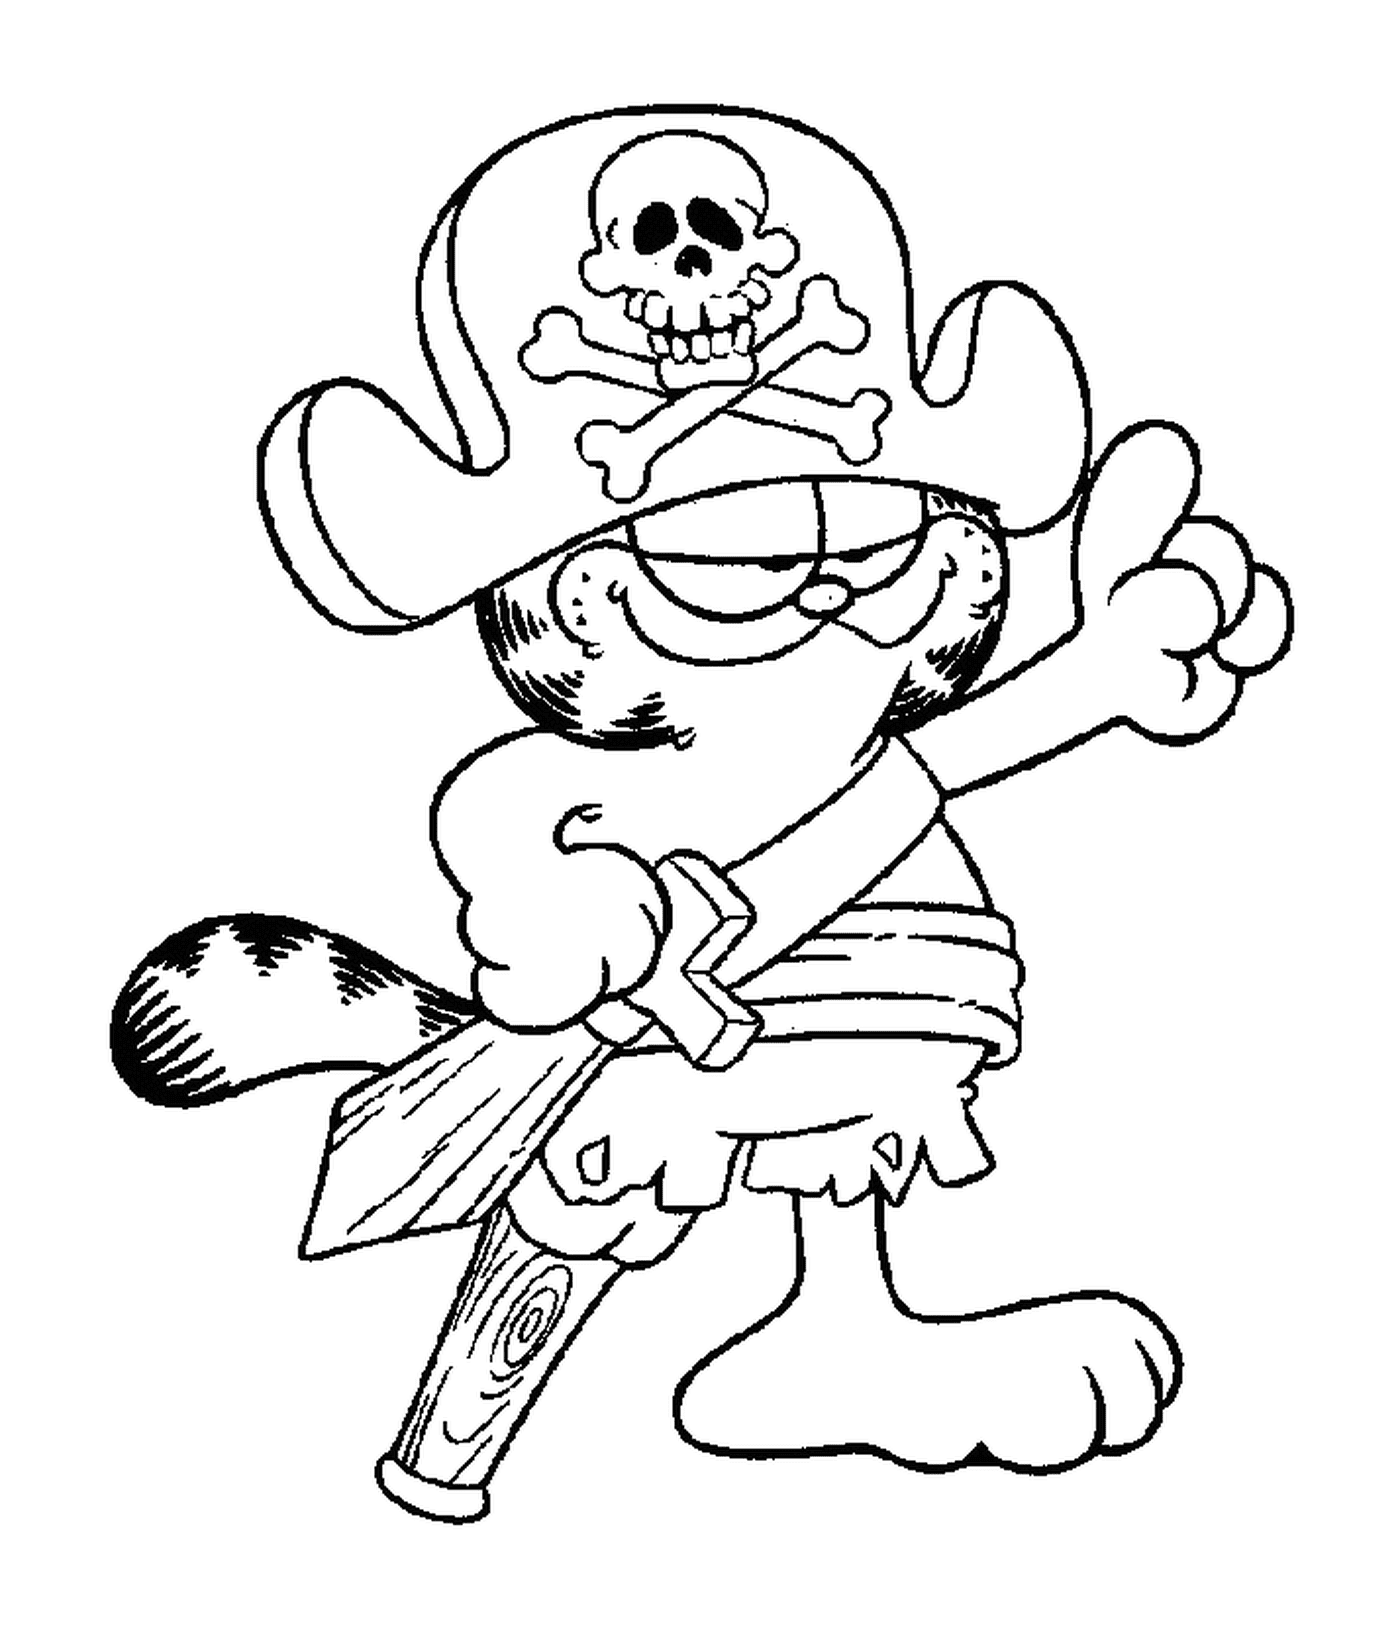  Garfield disfarçado de pirata 